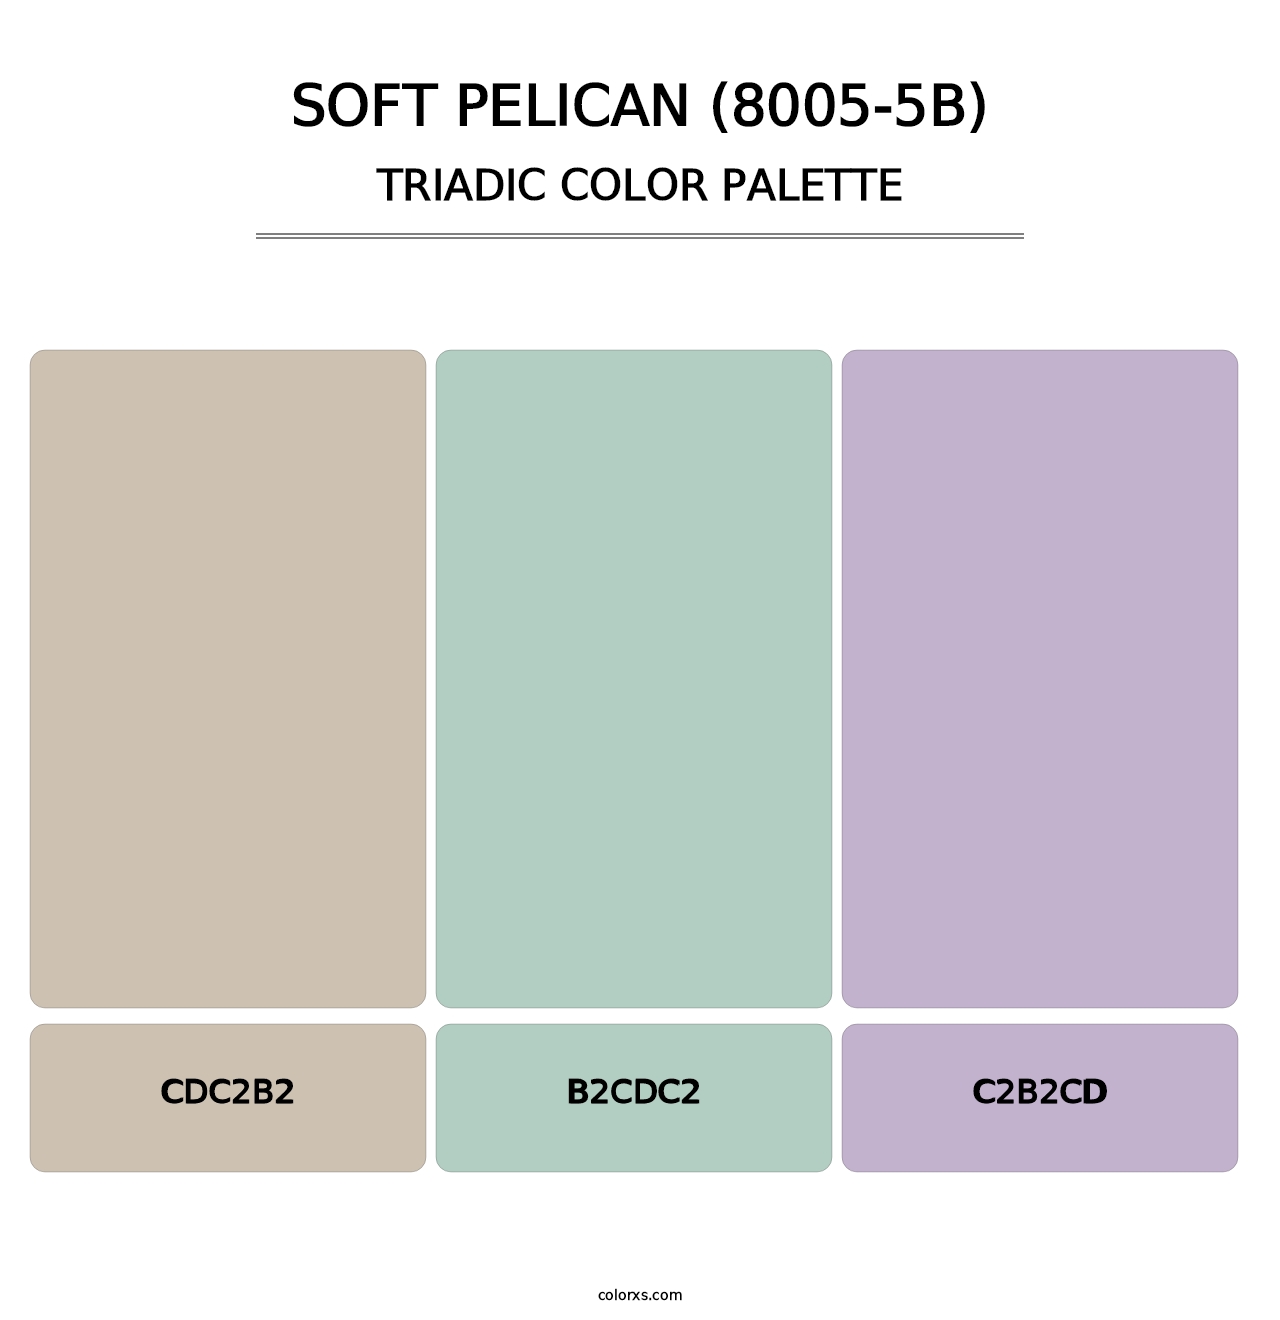 Soft Pelican (8005-5B) - Triadic Color Palette